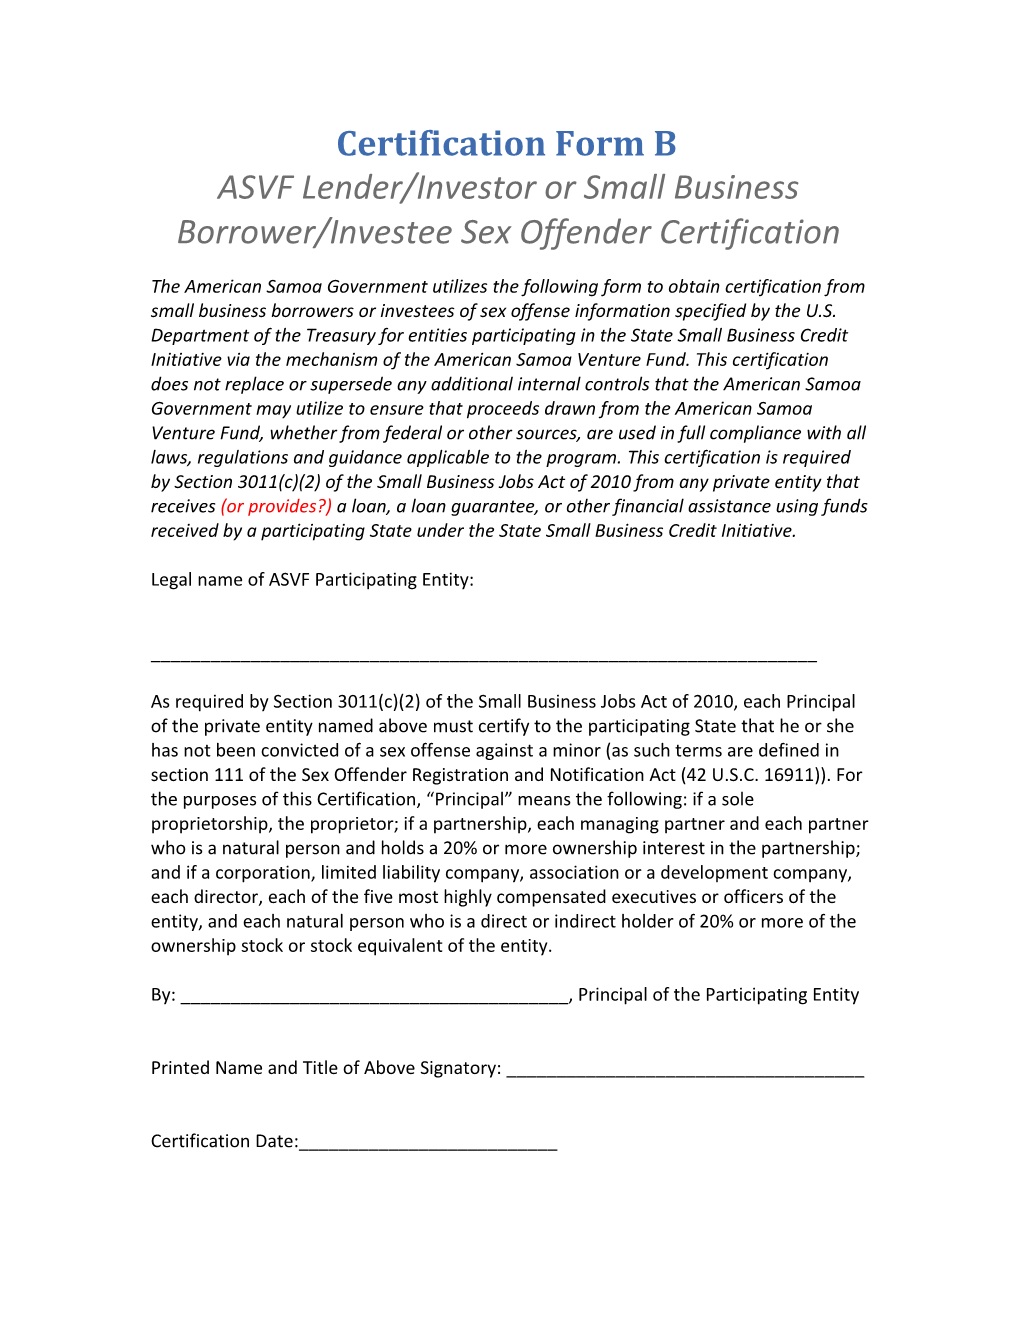 ASVF Lender/Investor Or Small Business Borrower/Investee Sex Offender Certification